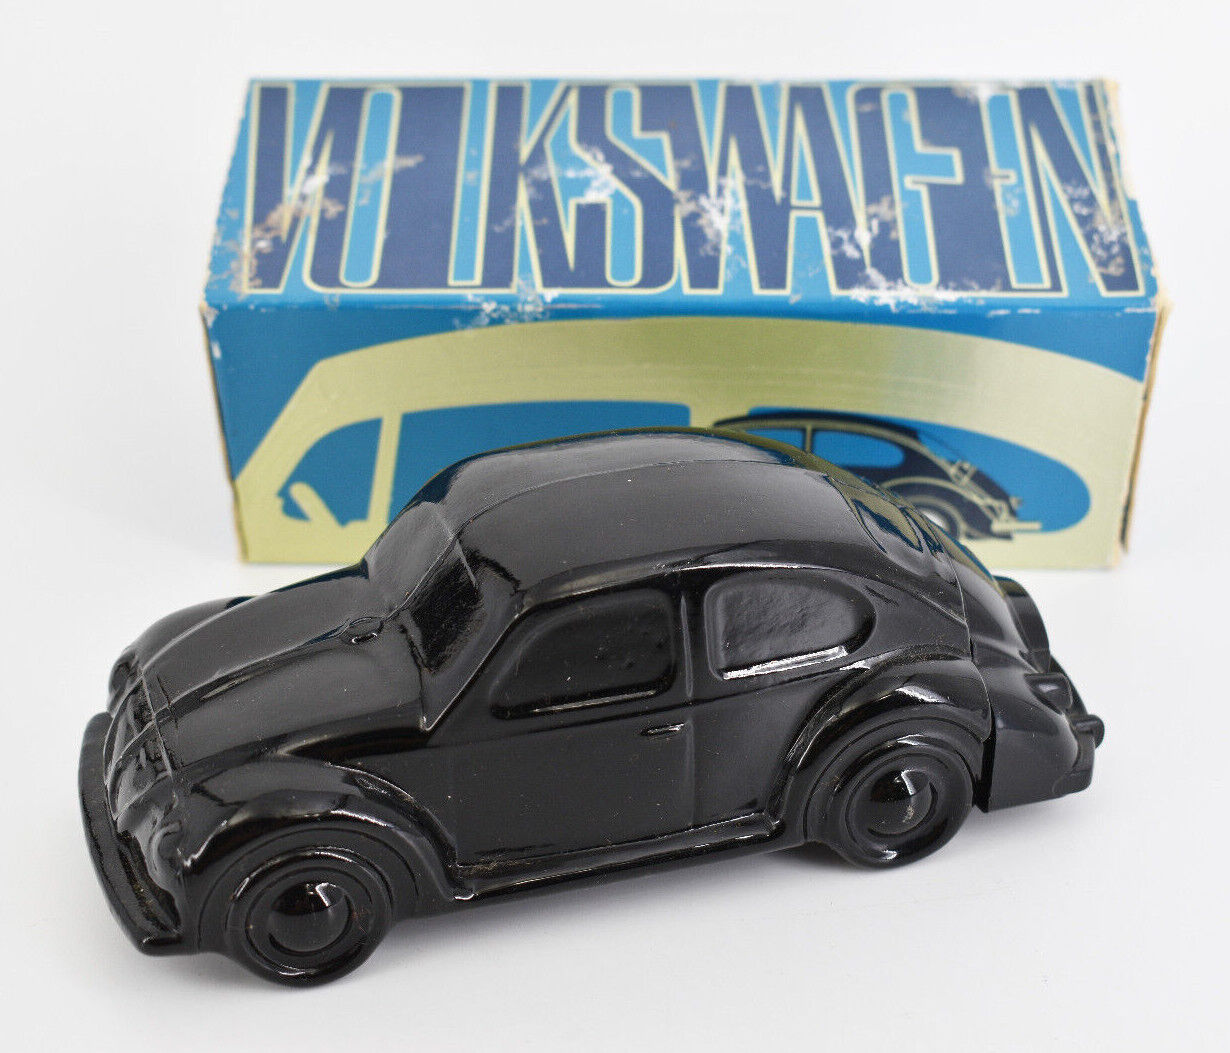 AVON Vintage Volkswagen Beetle Black Glass Car Wild Country Aftershave Bottle